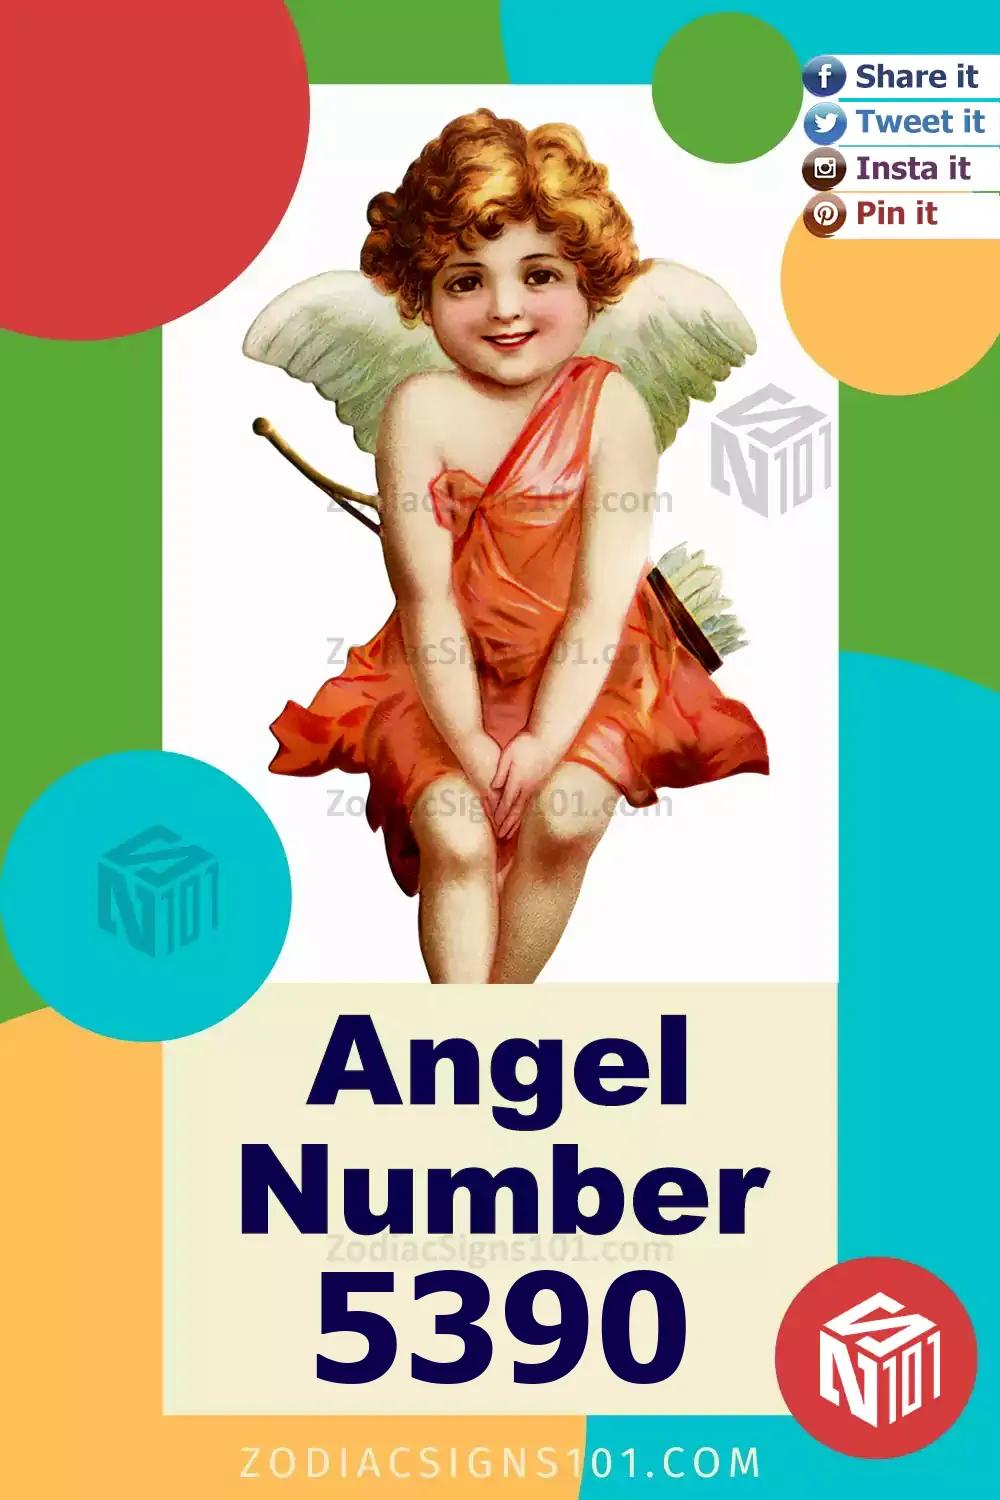 5390-Angel-Number-Meaning.jpg